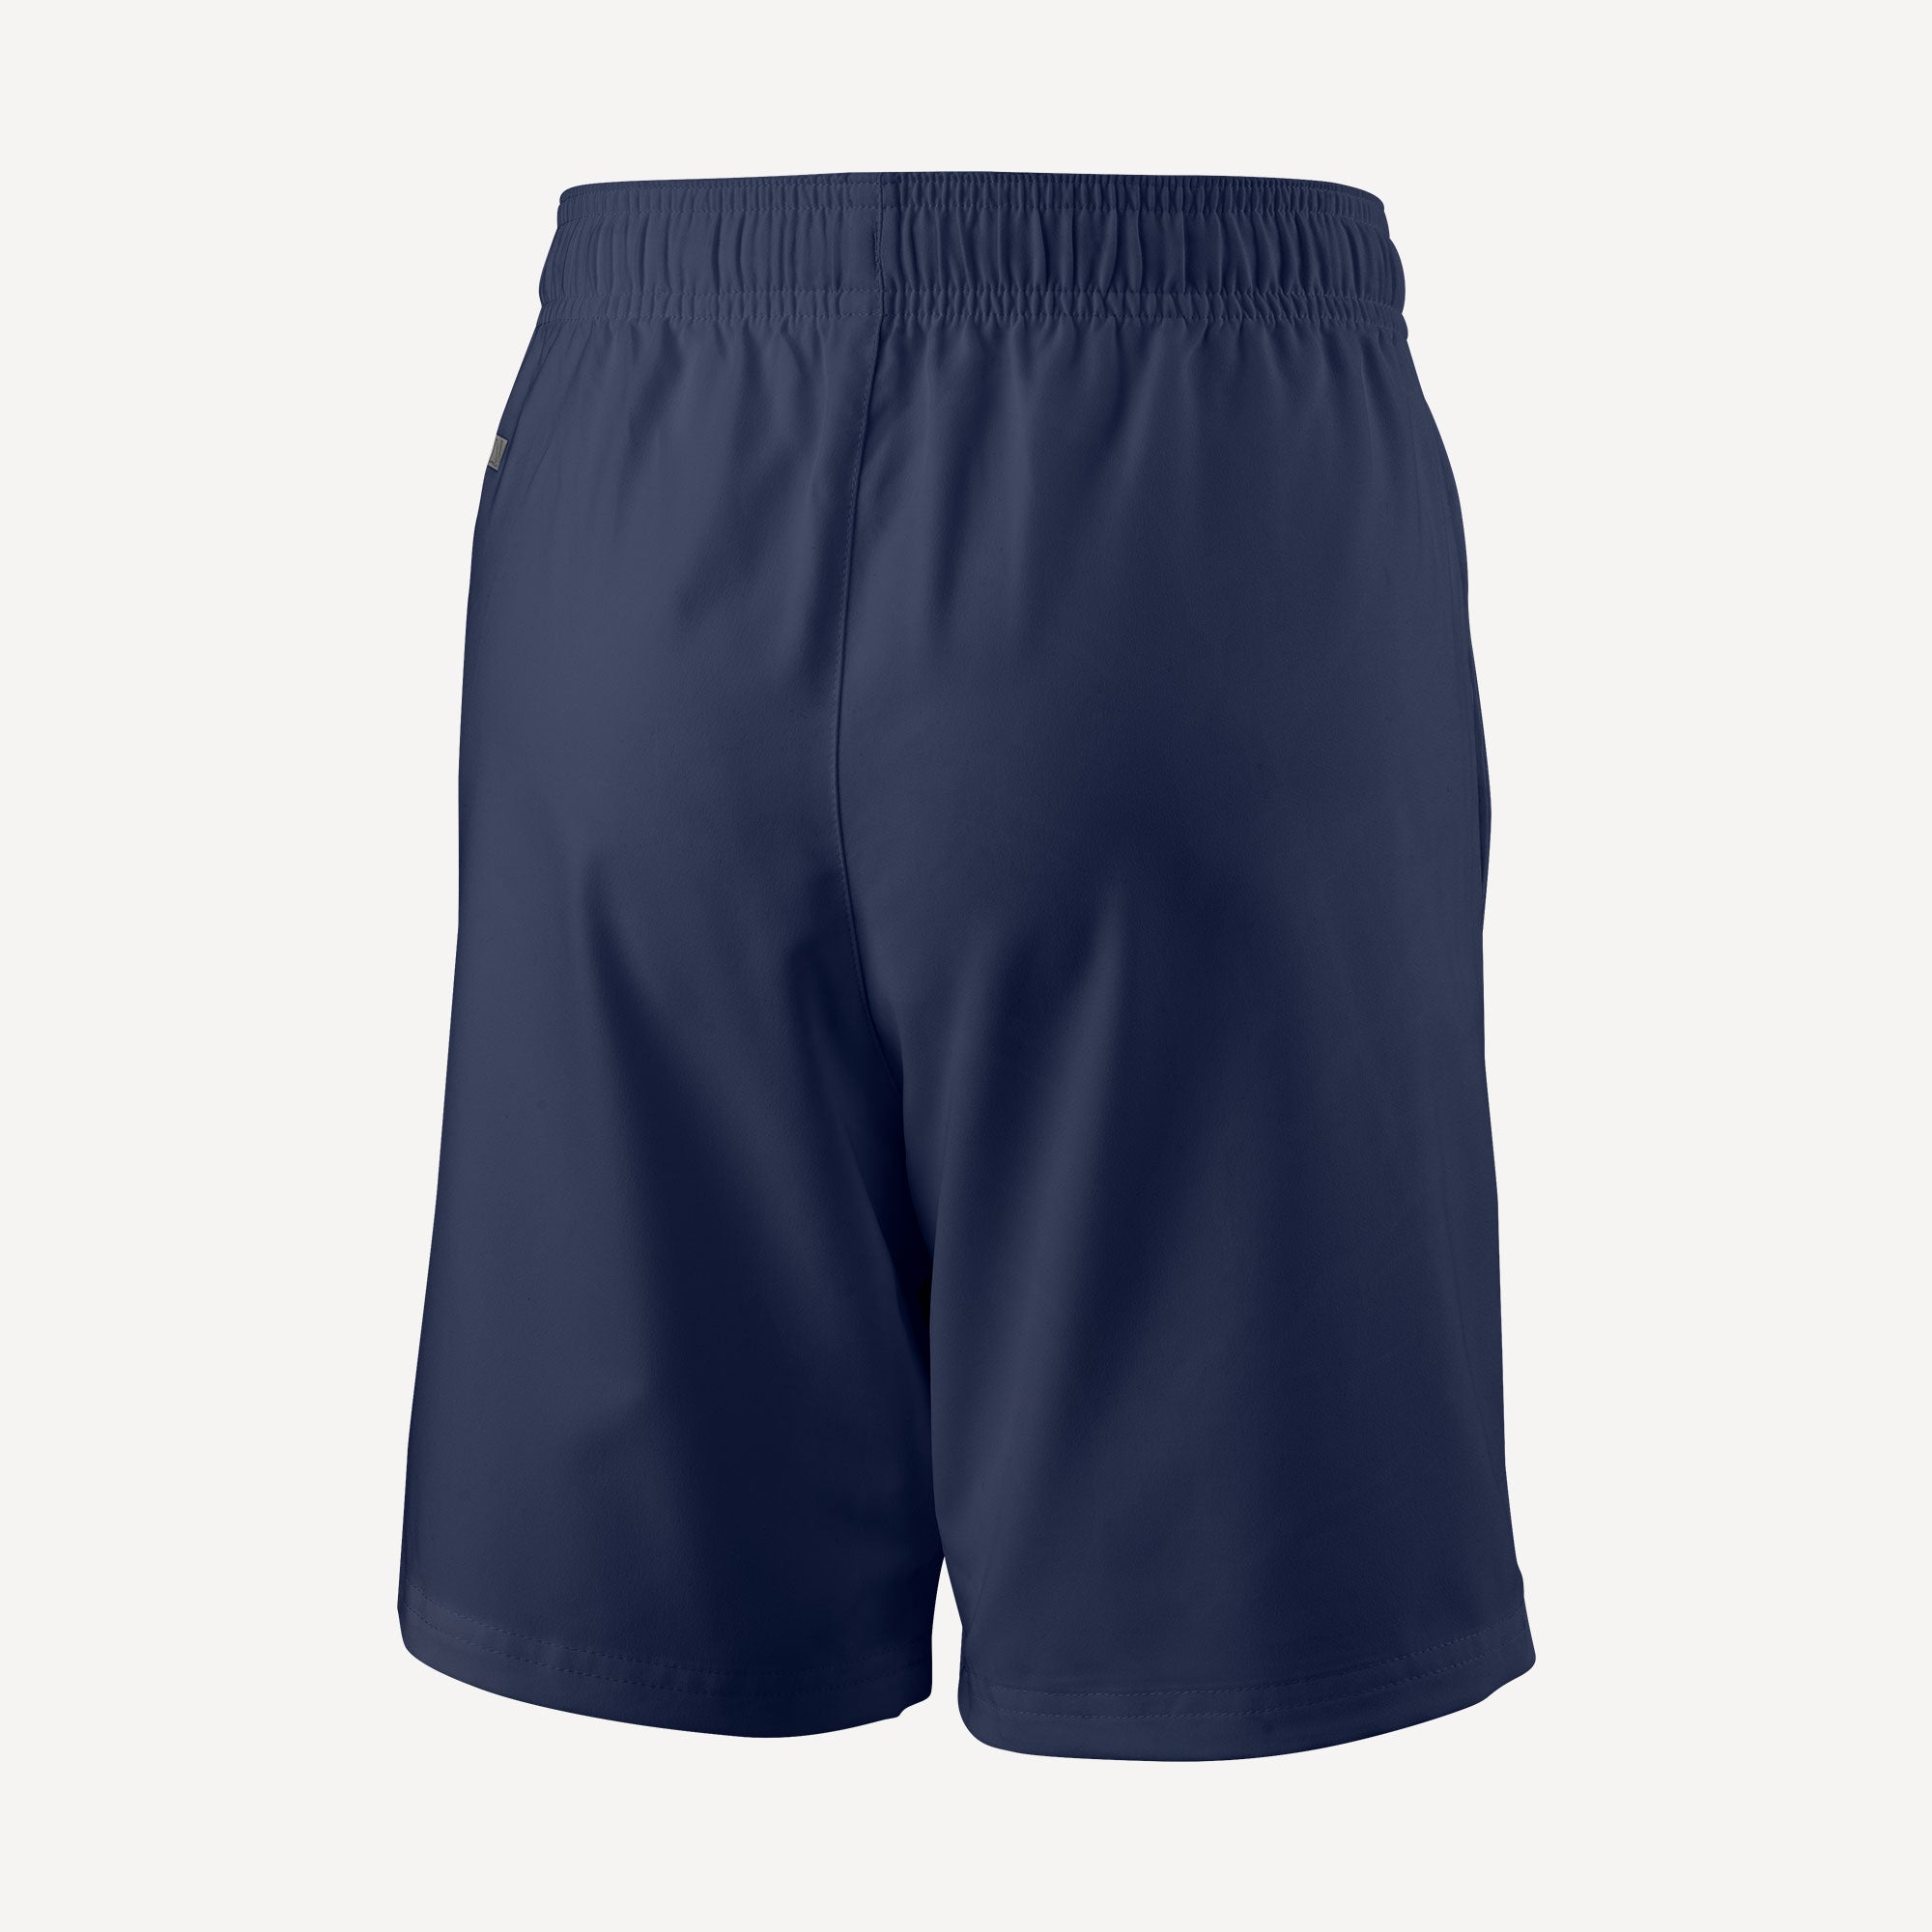 Wilson Team 2 Boys' 7-Inch Tennis Shorts Blue (2)